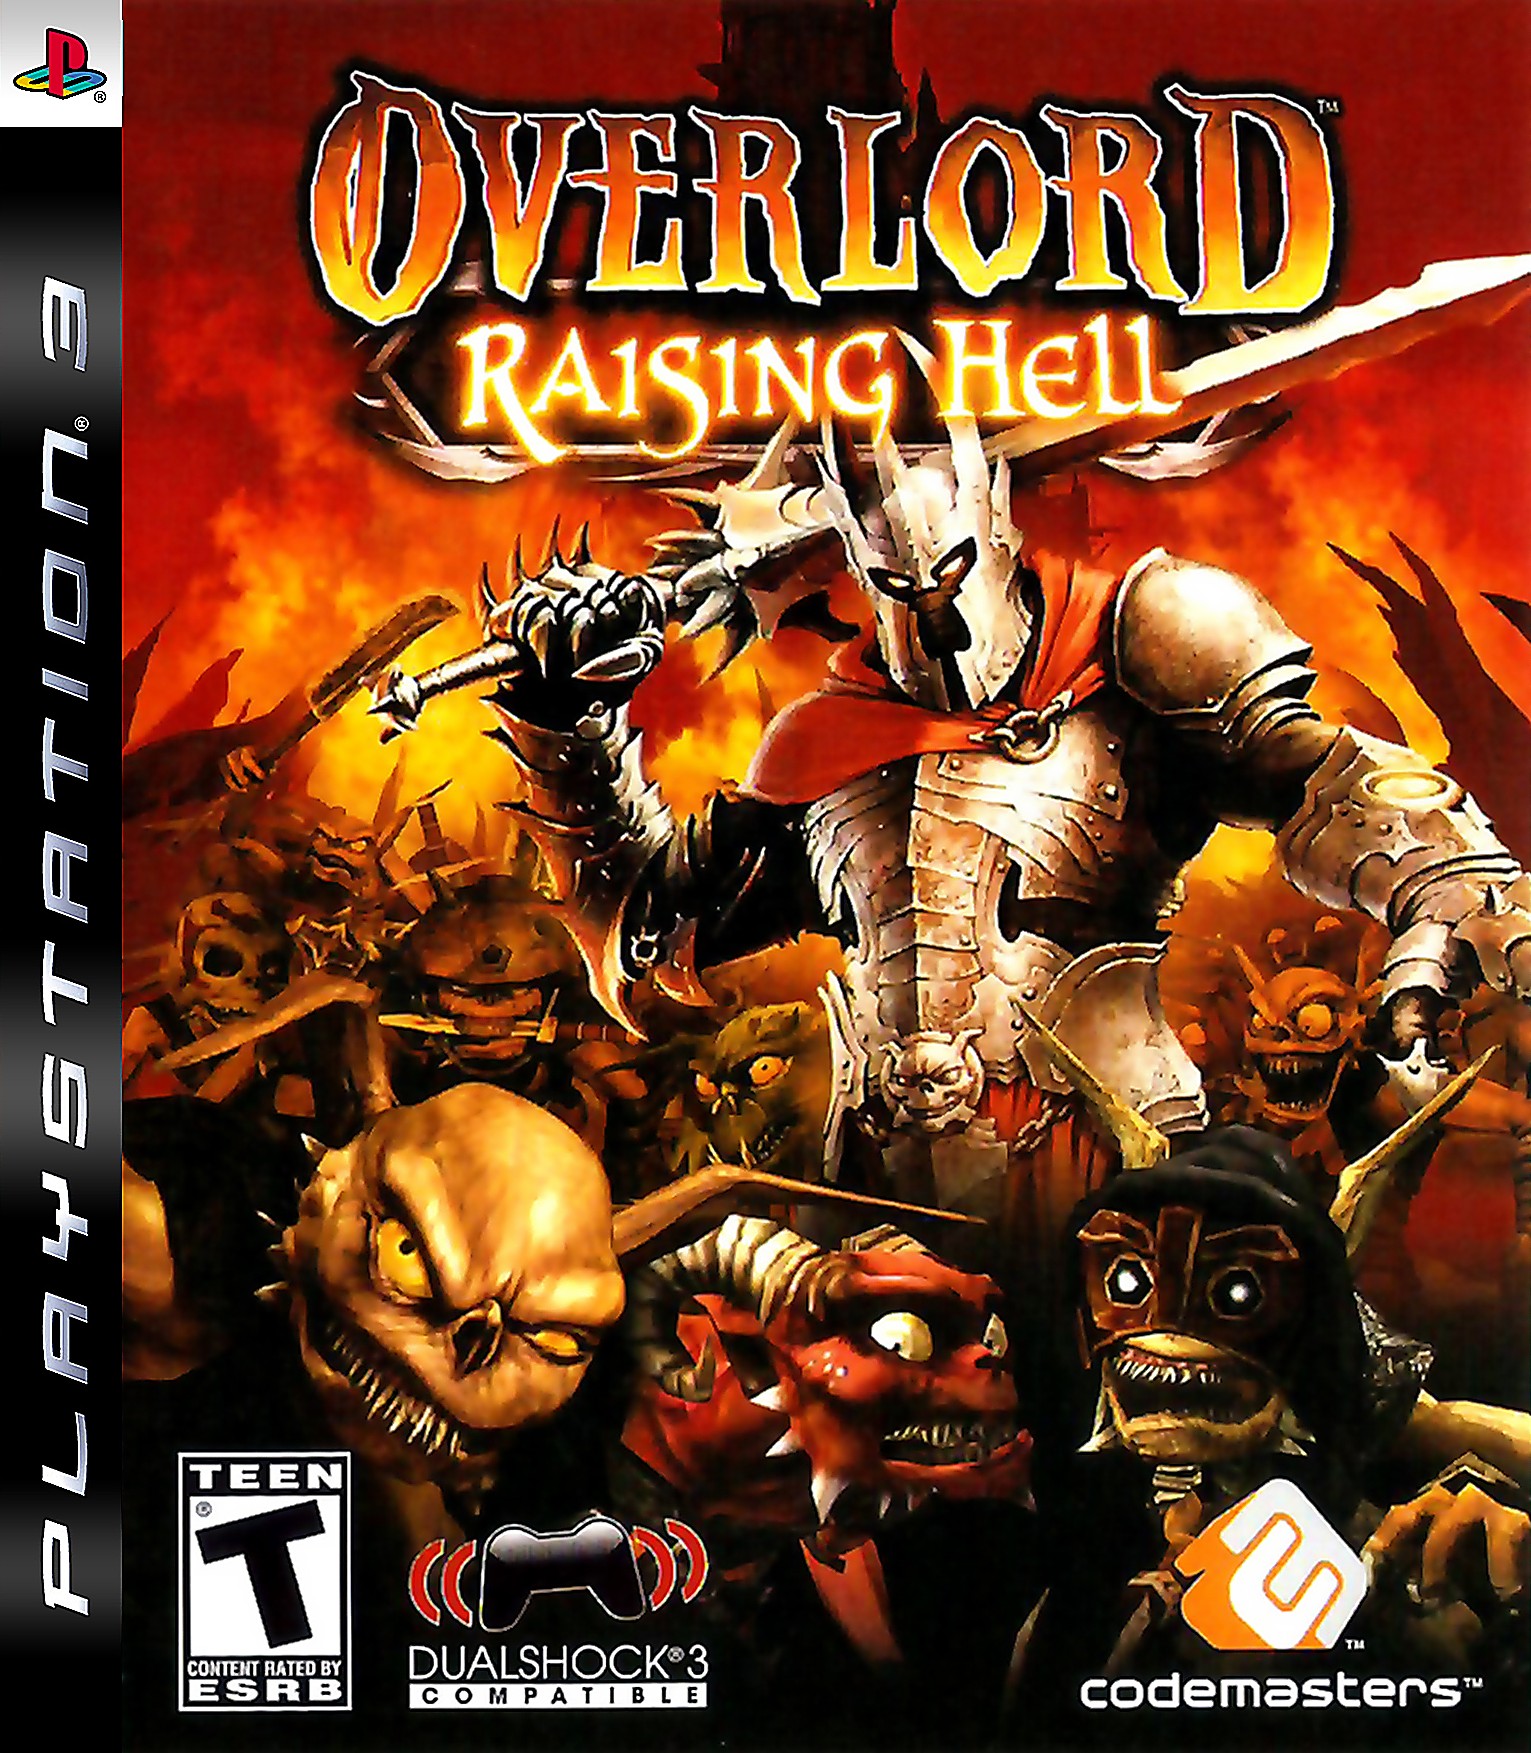 'Overlord: Raising Hell'